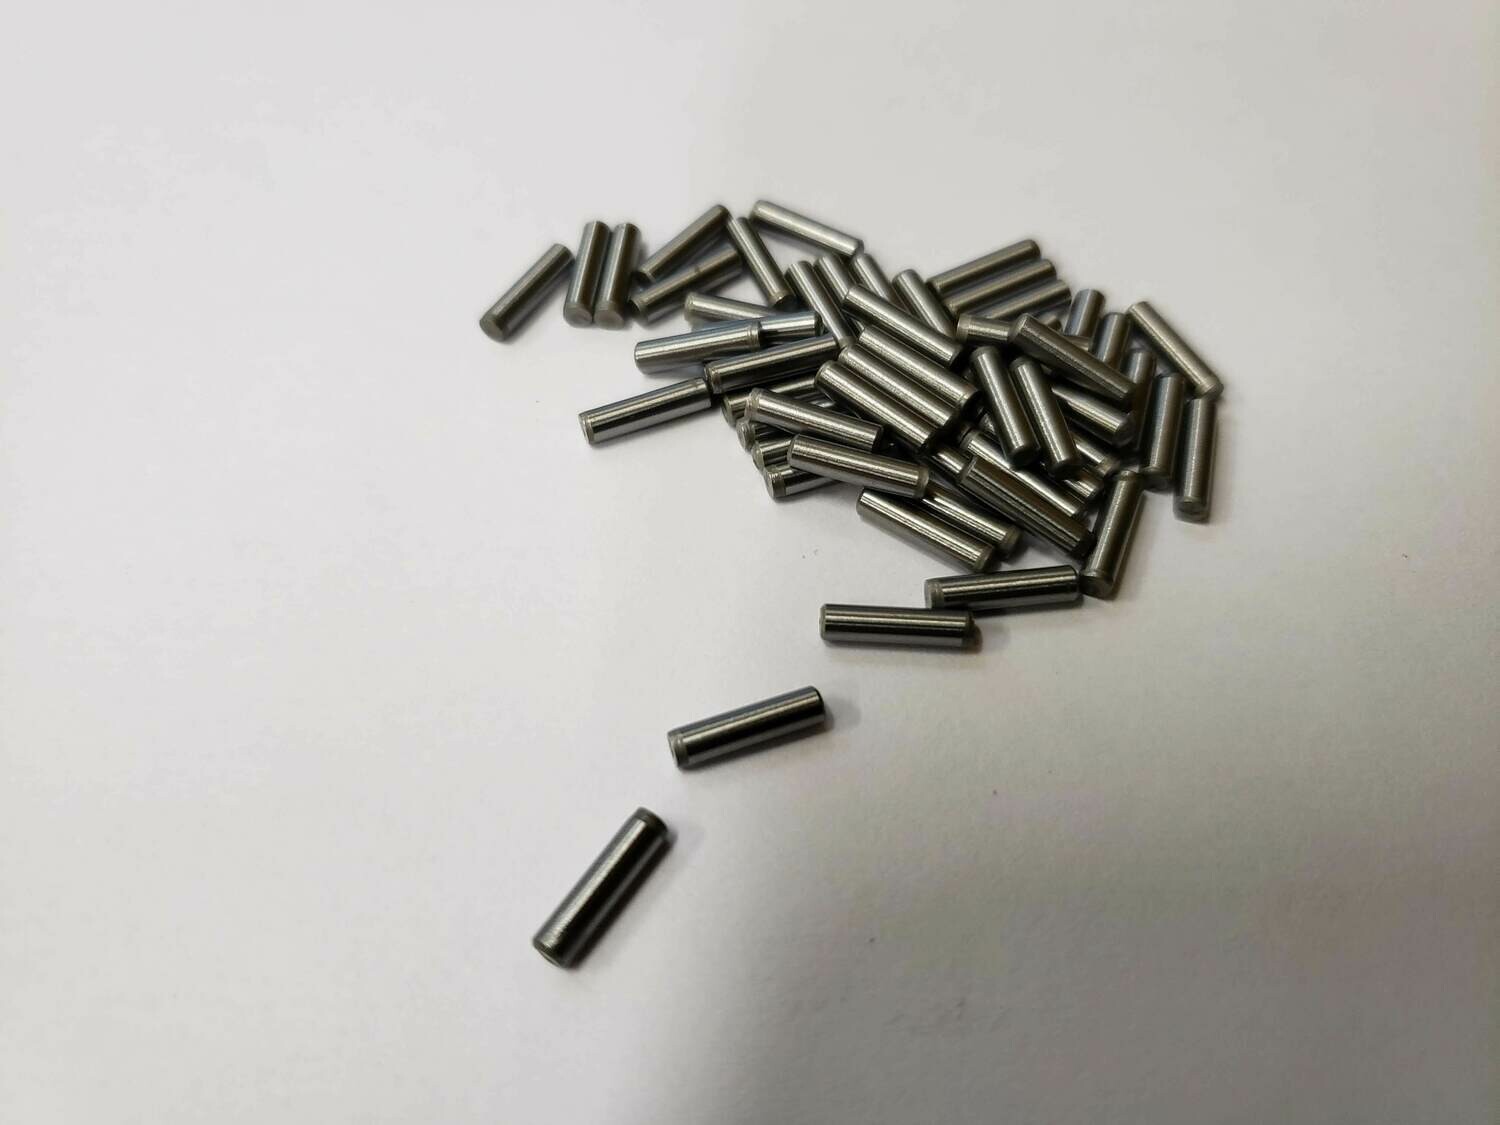 Pins, hex pins set screws